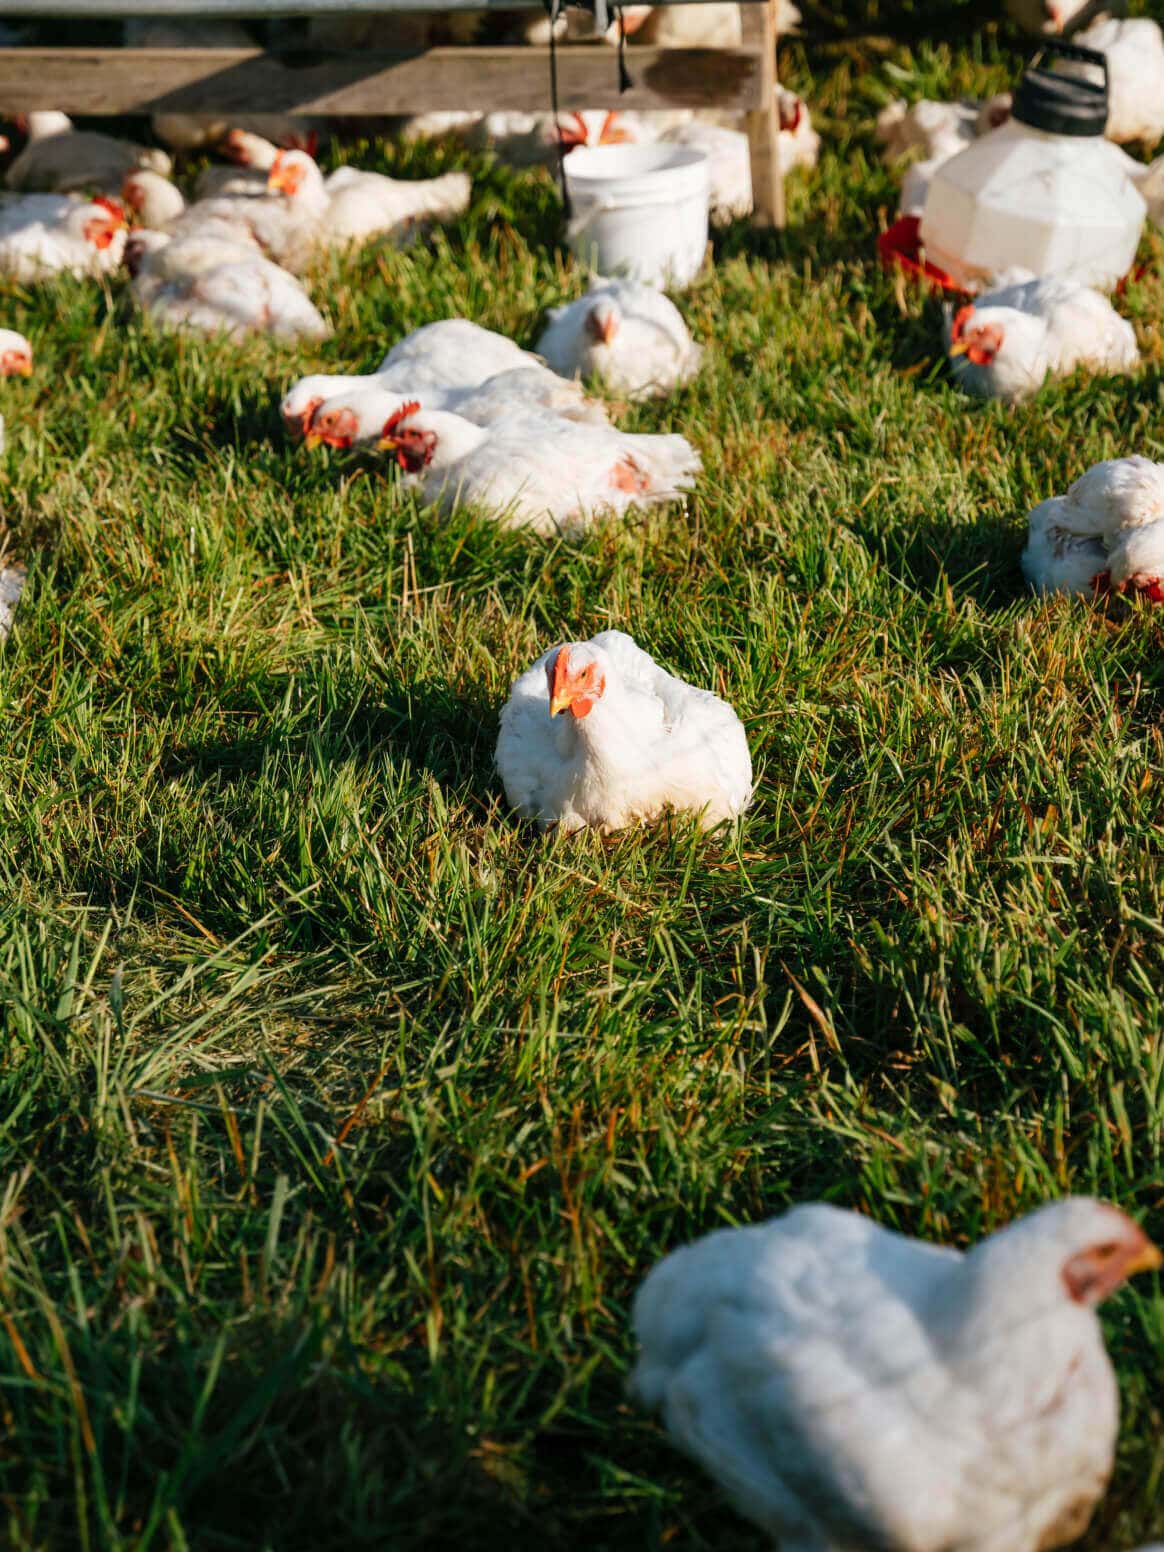 Chickens in grass.